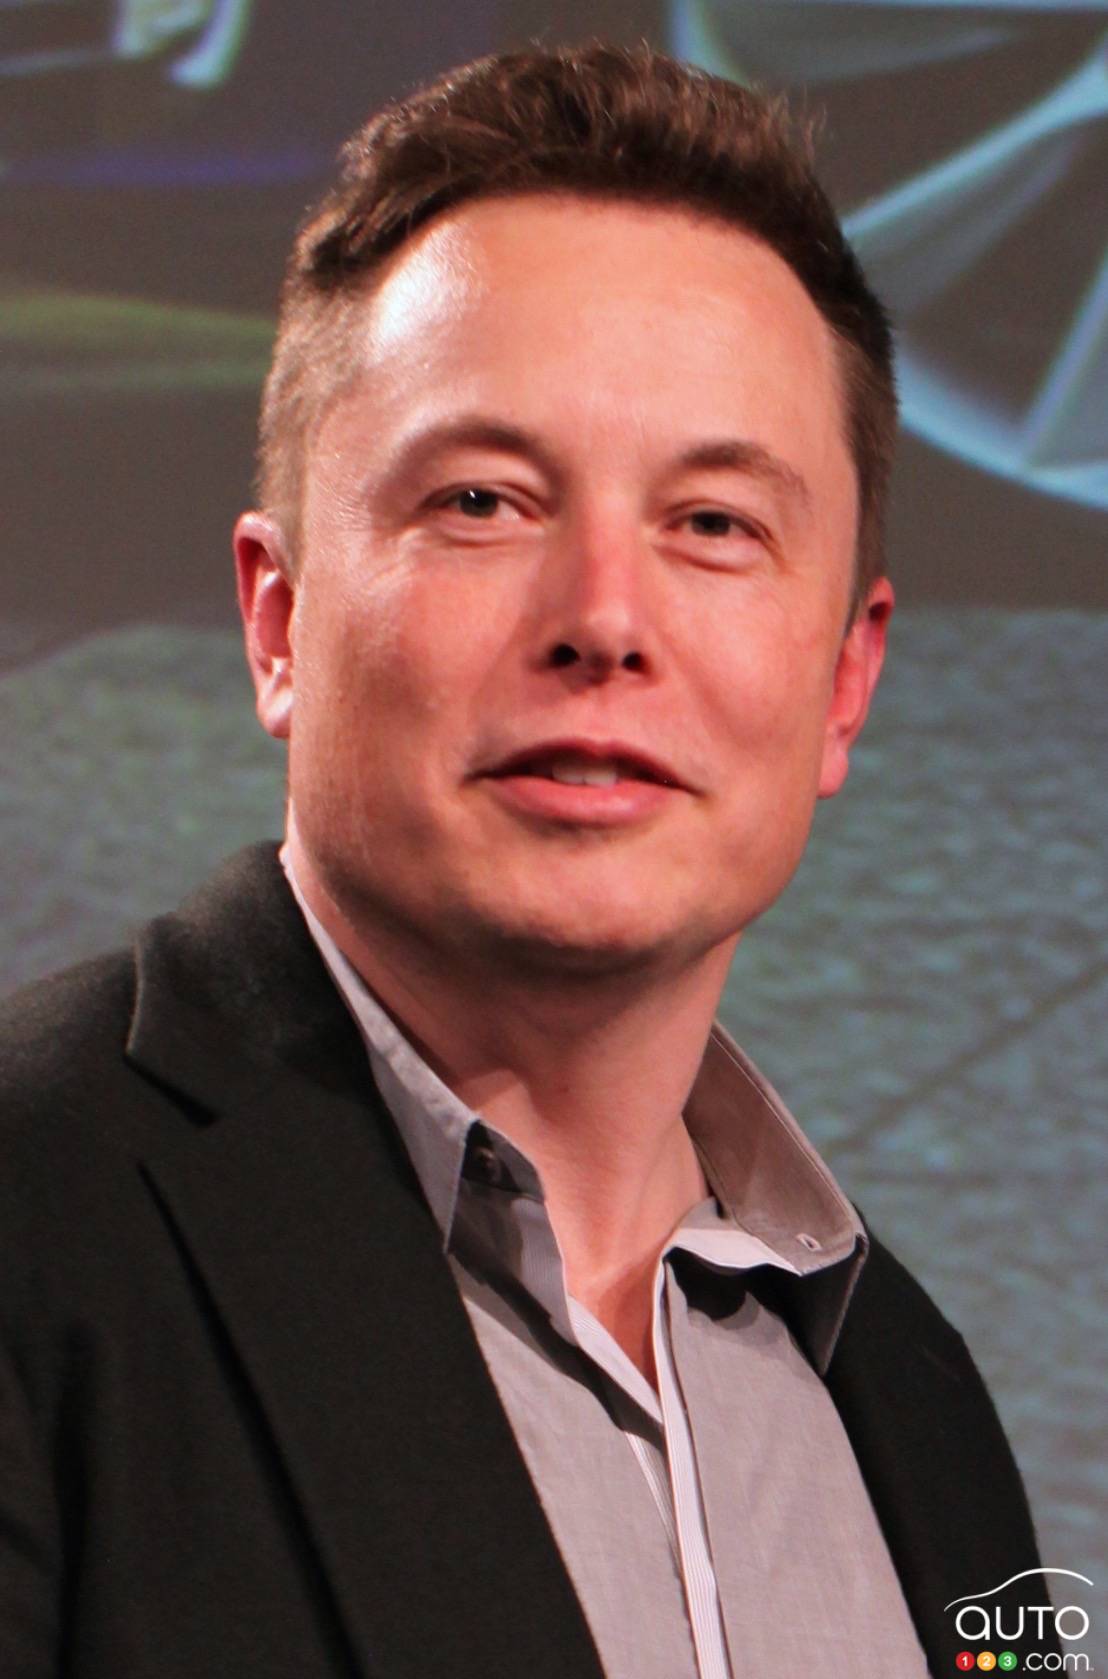 Tesla CEO Elon Musk prepares to make “Top Secret” announcement